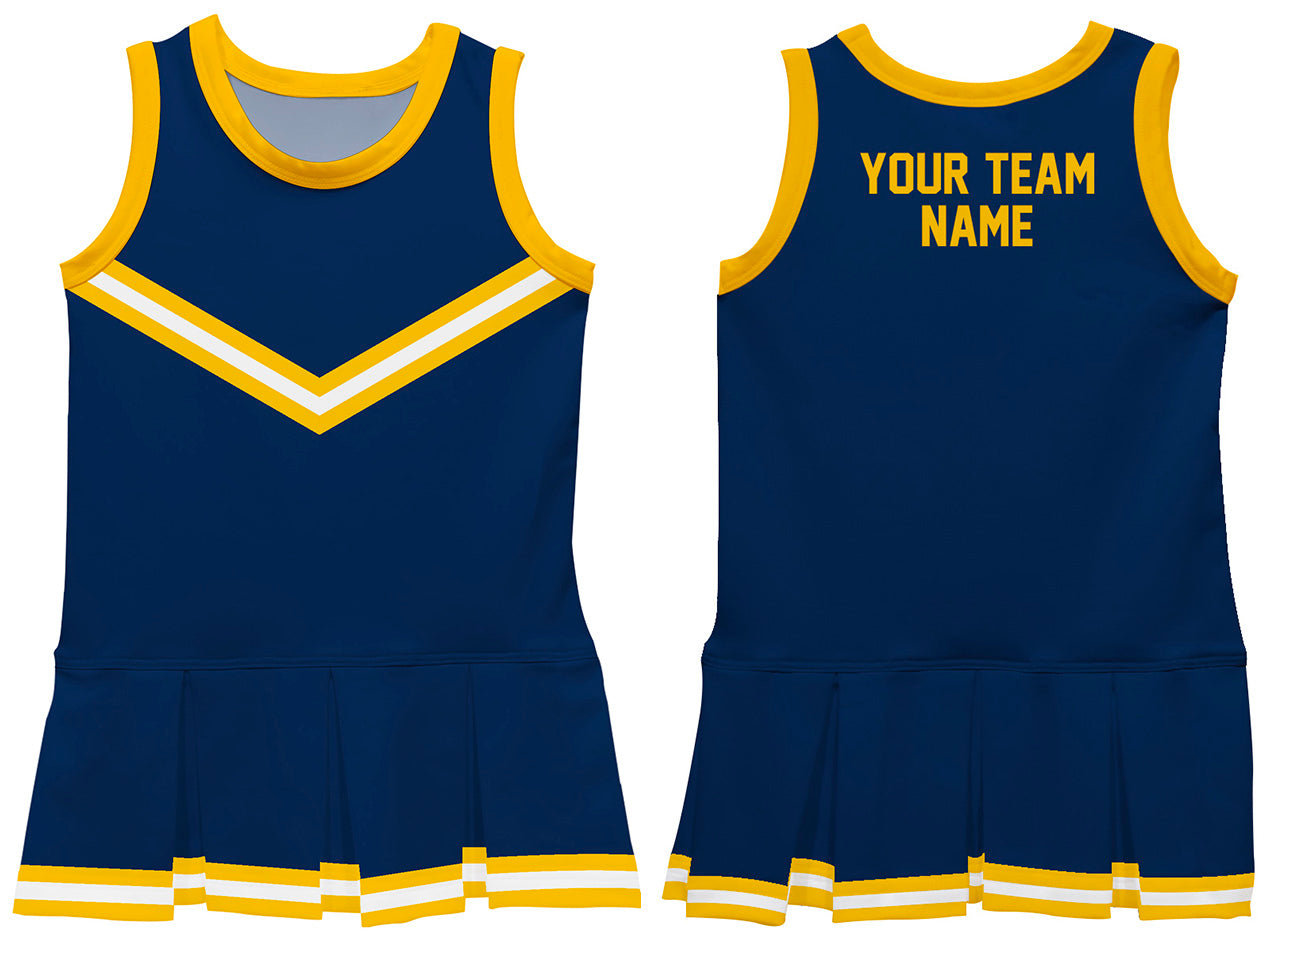 Navy Yellow Sleeveless Gril Cheerleader Dress - Wimziy&Co.